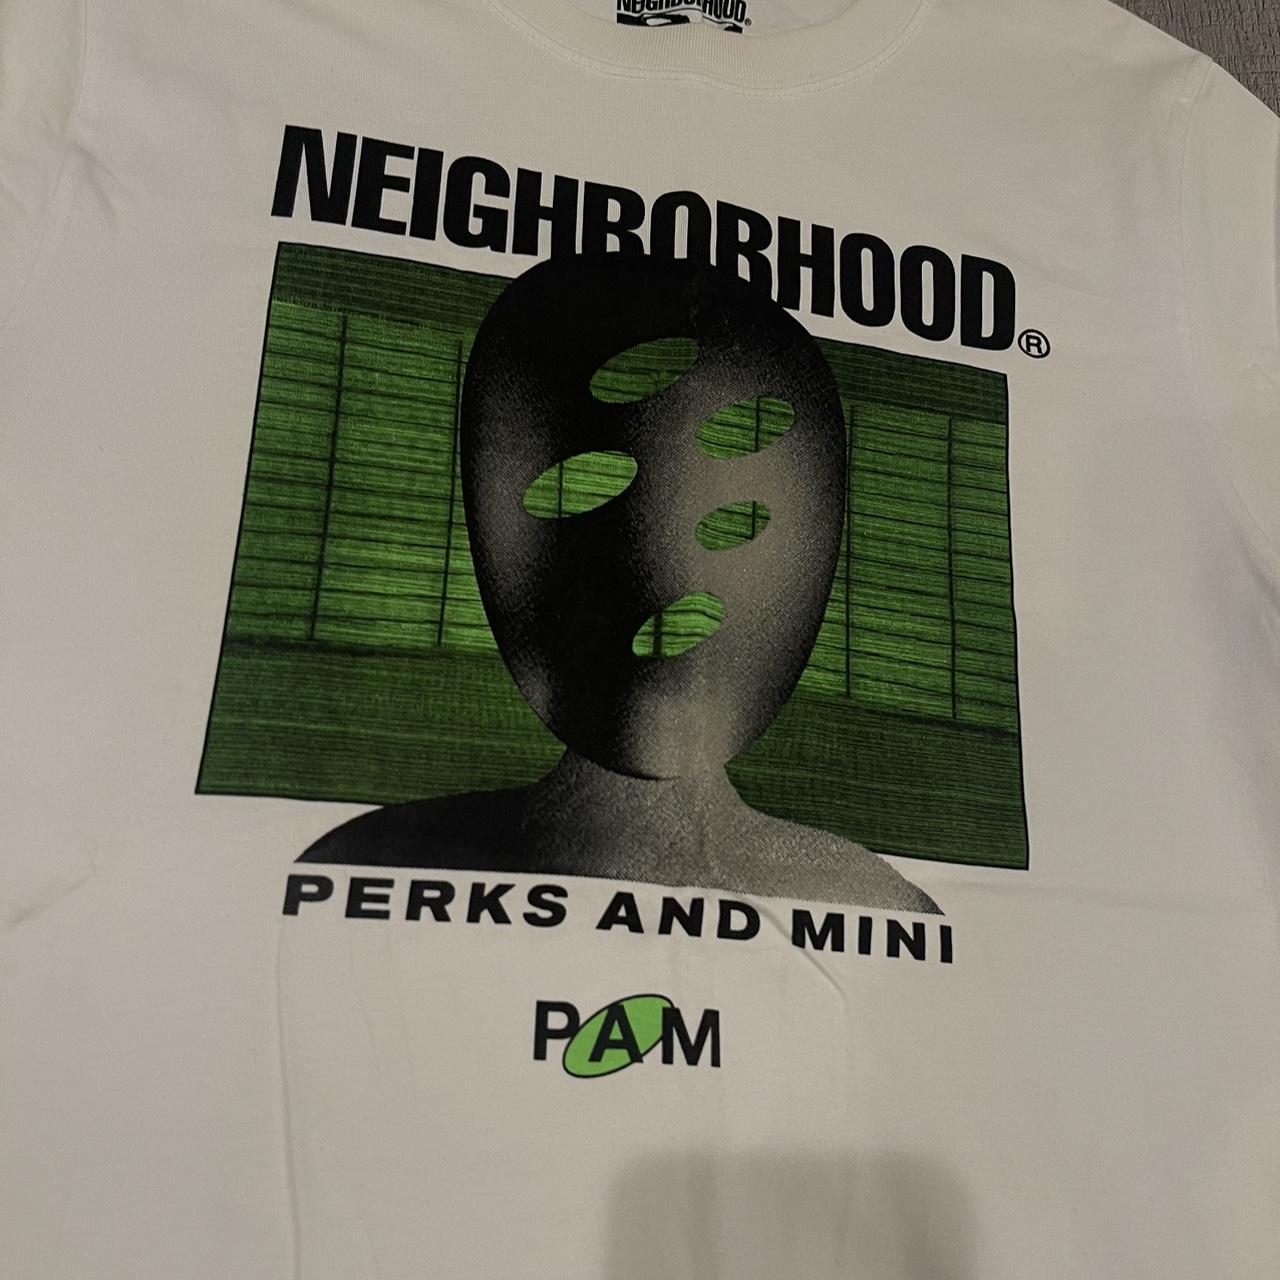 Neighborhood Men's White T-shirt (2)